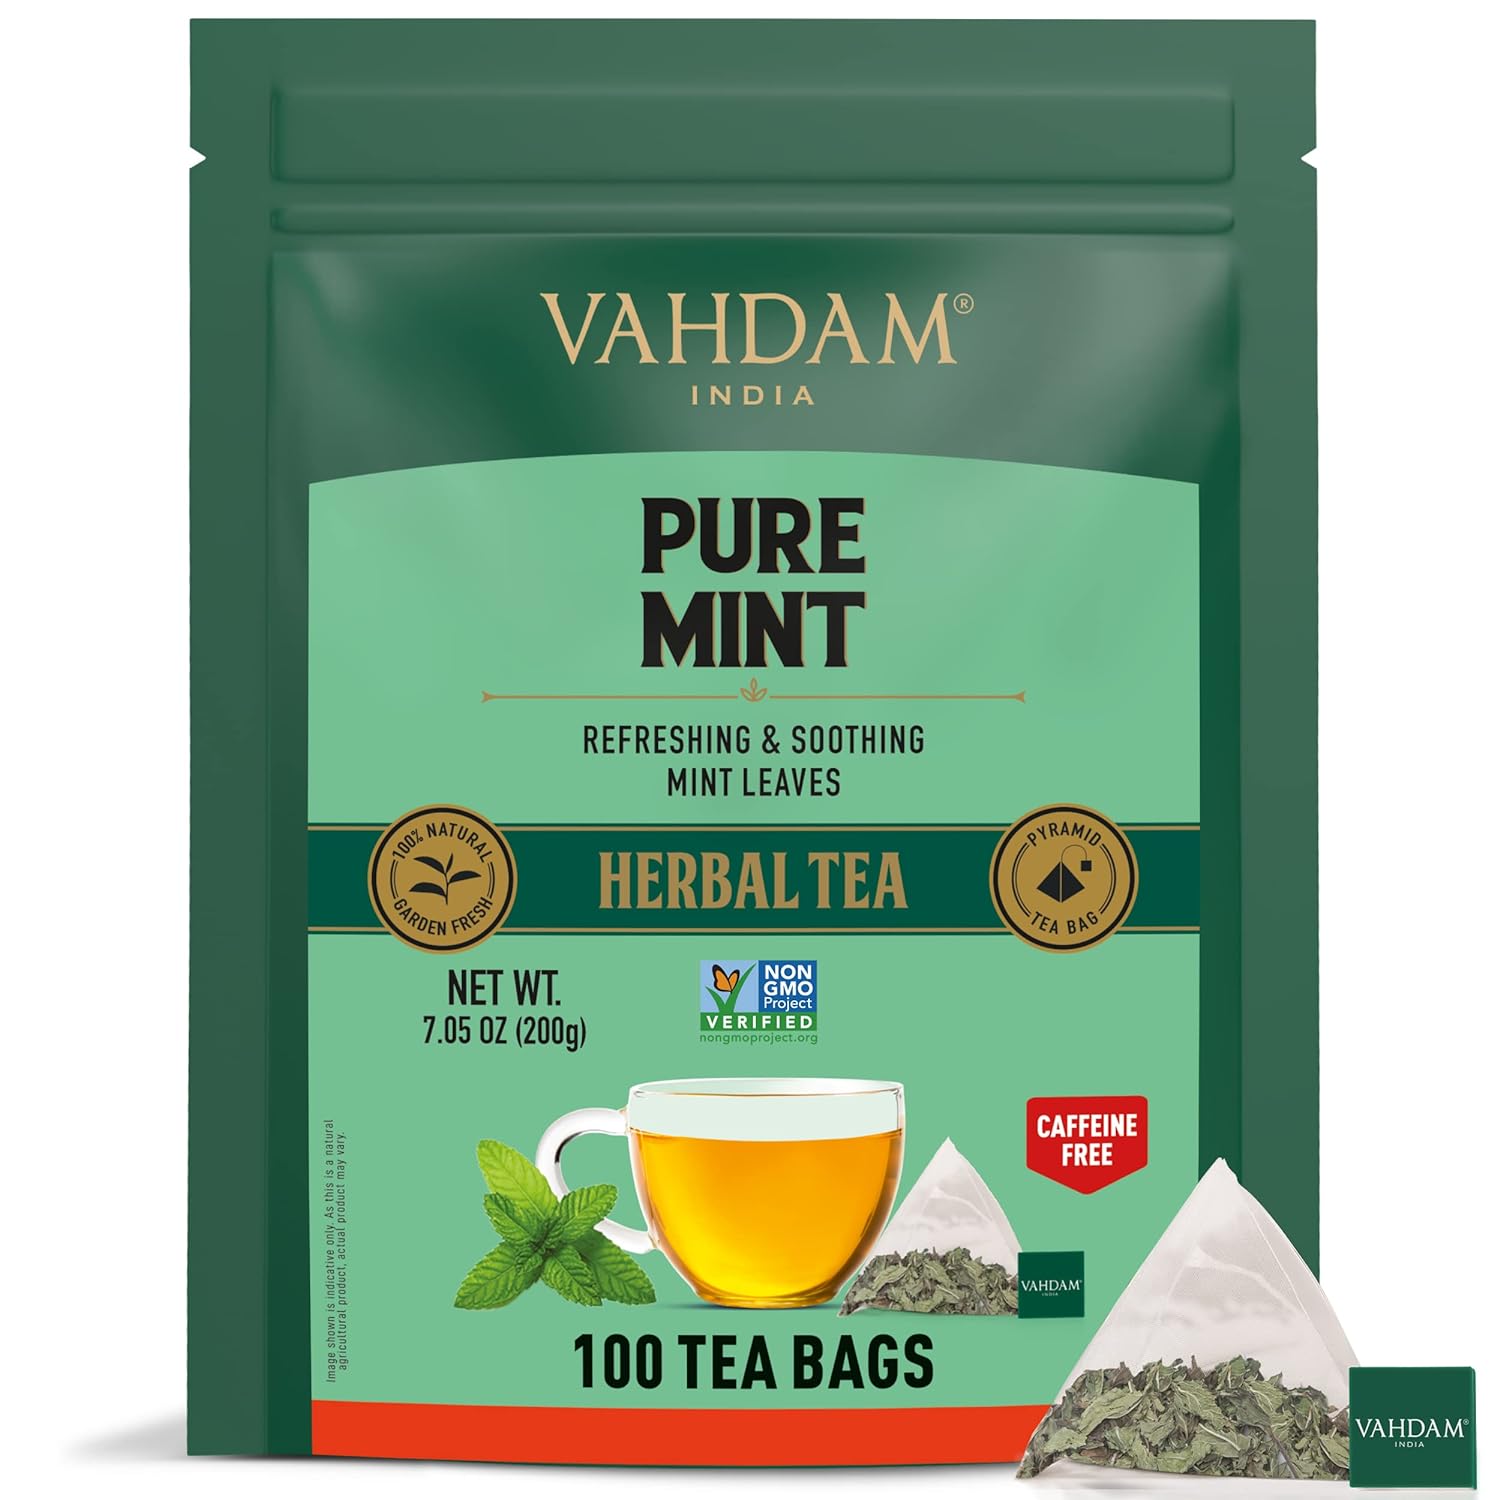 Pure Leaf launches Herbal Iced Tea varieties